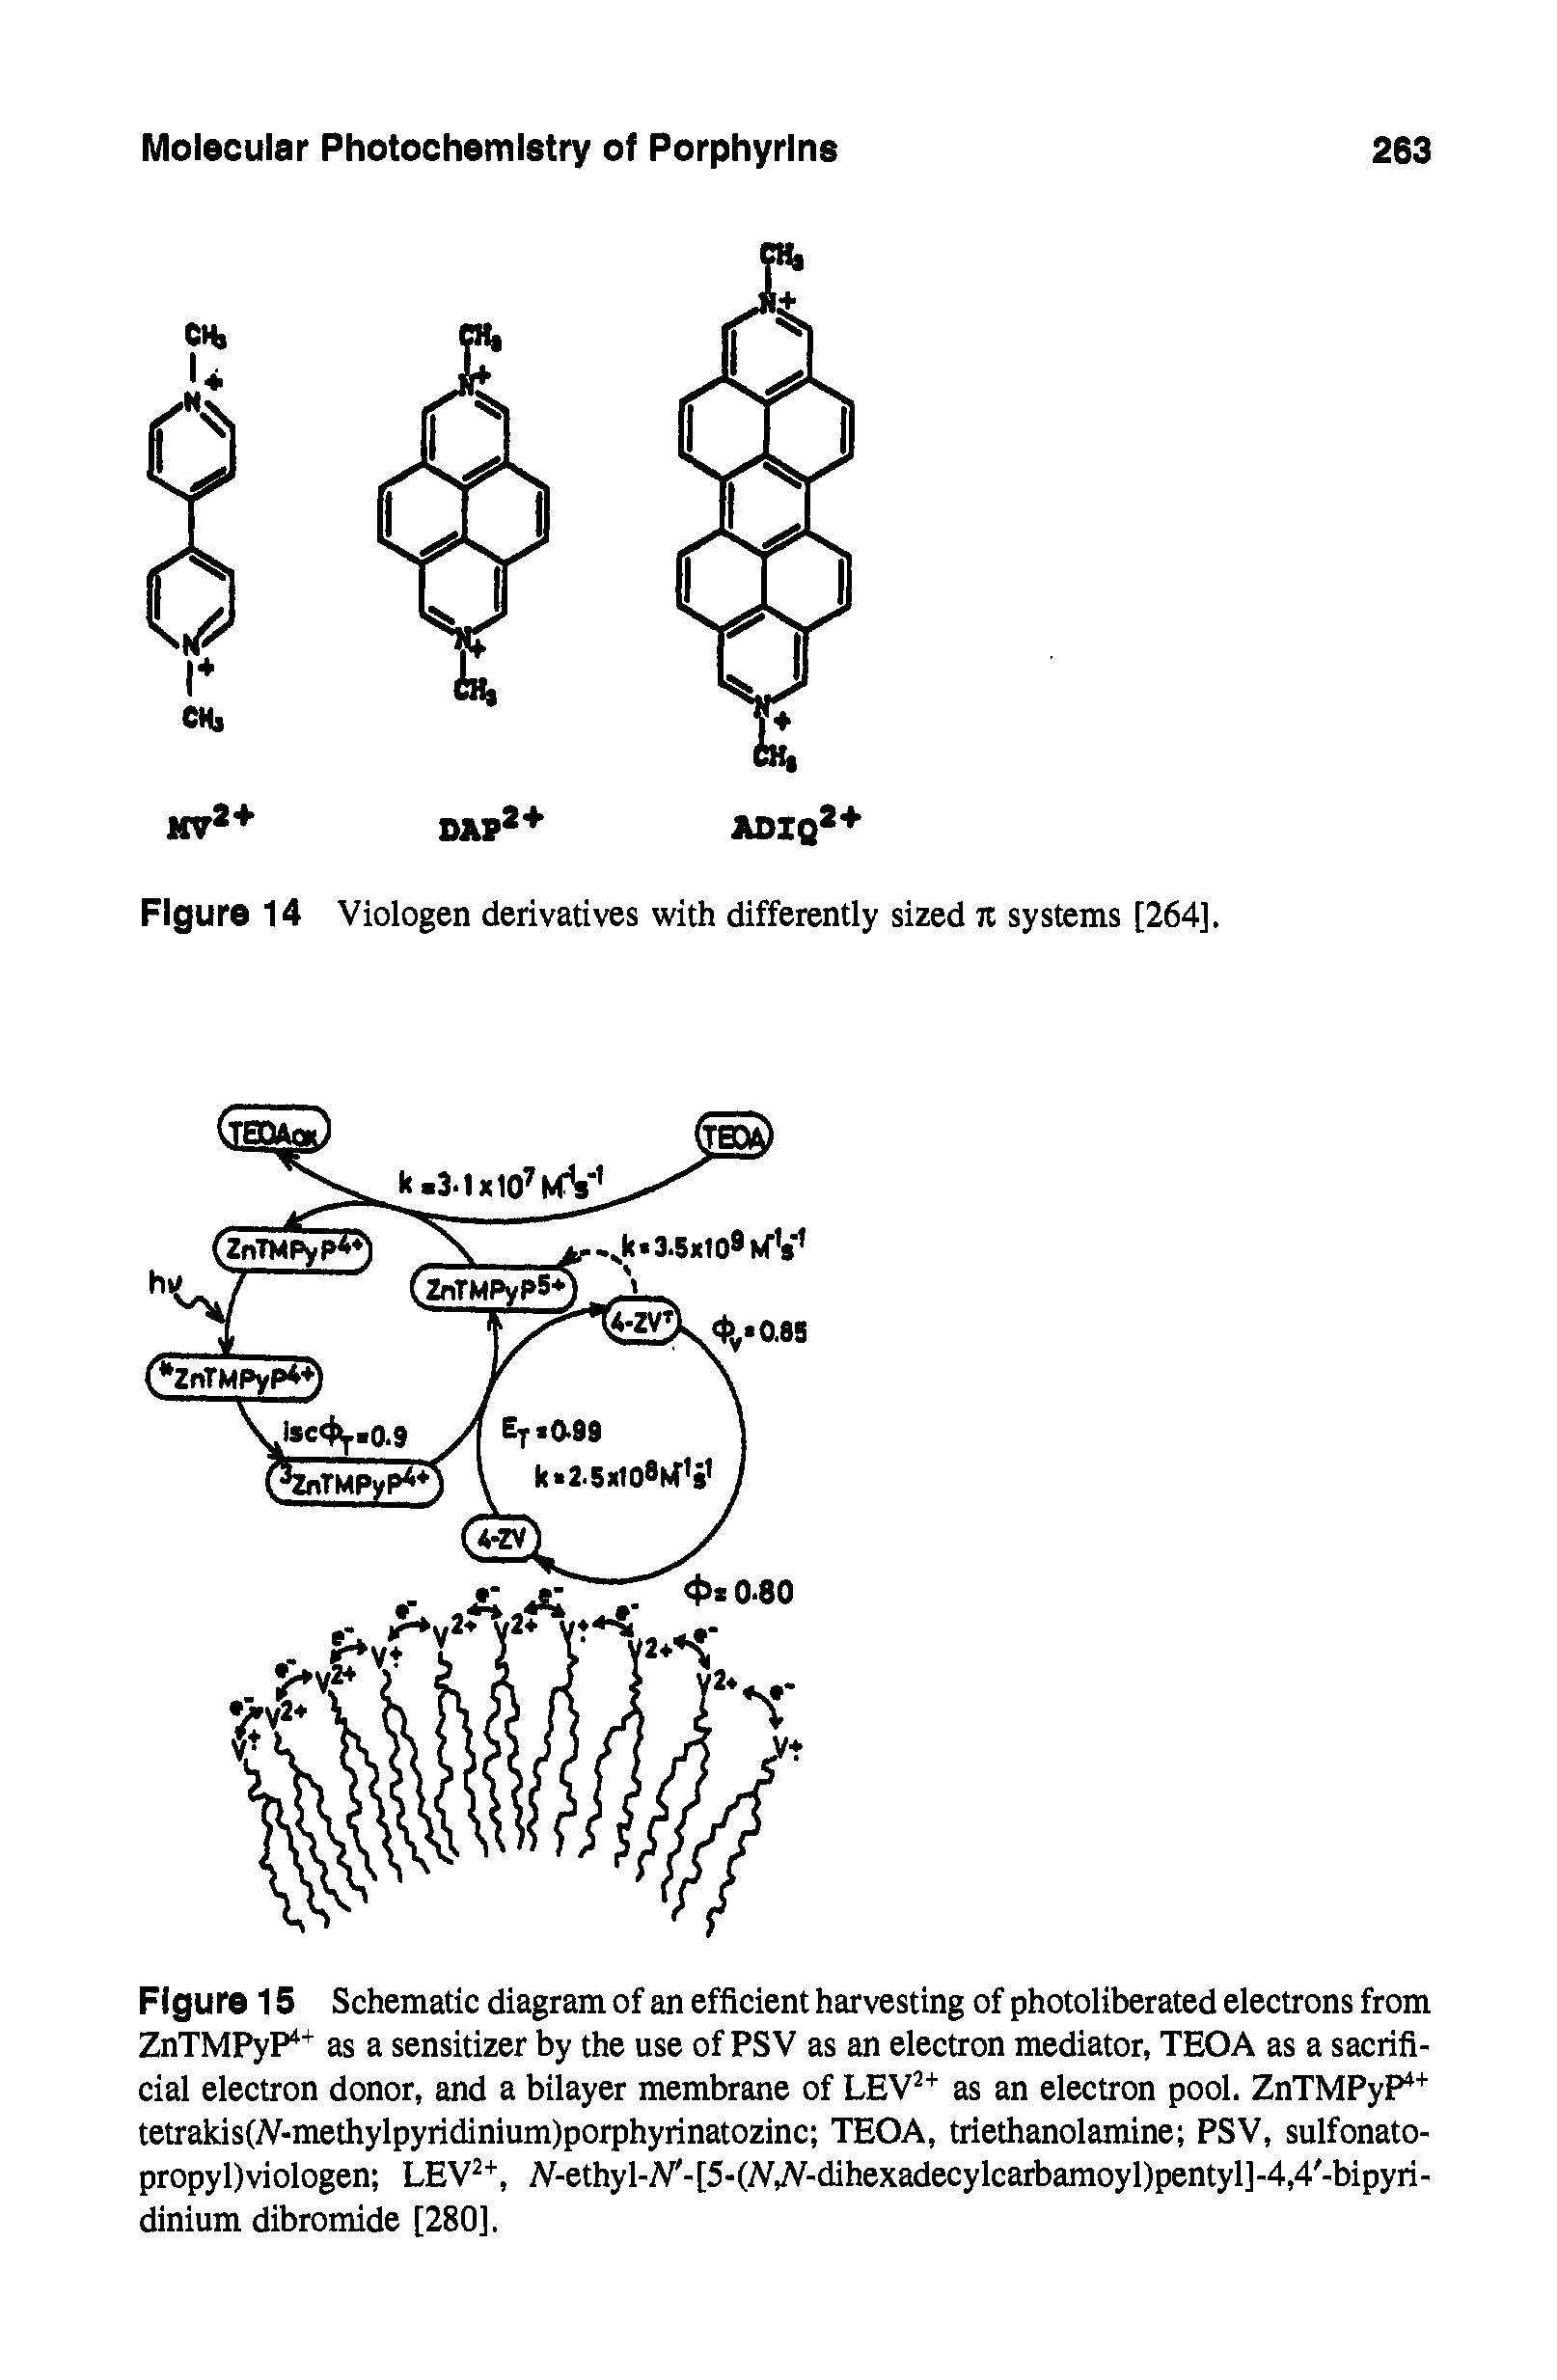 Figure 15 Schematic diagram of an efficient harvesting of photoliberated electrons from ZnTMPyP as a sensitizer by the use of PSV as an electron mediator, TEOA as a sacrificial electron donor, and a bilayer membrane of LEV as an electron pool. ZnTMPyP tetrakis(A -methylpyridinium)porphyrinatozinc TEOA, triethanolamine PSV, sulfonato-propyl)viologen LEV, V-ethyl-V -[5-(VA -dihexadecylcarbamoyl)pentyl]-4,4 -bipyri-dinium dibromide [280],...